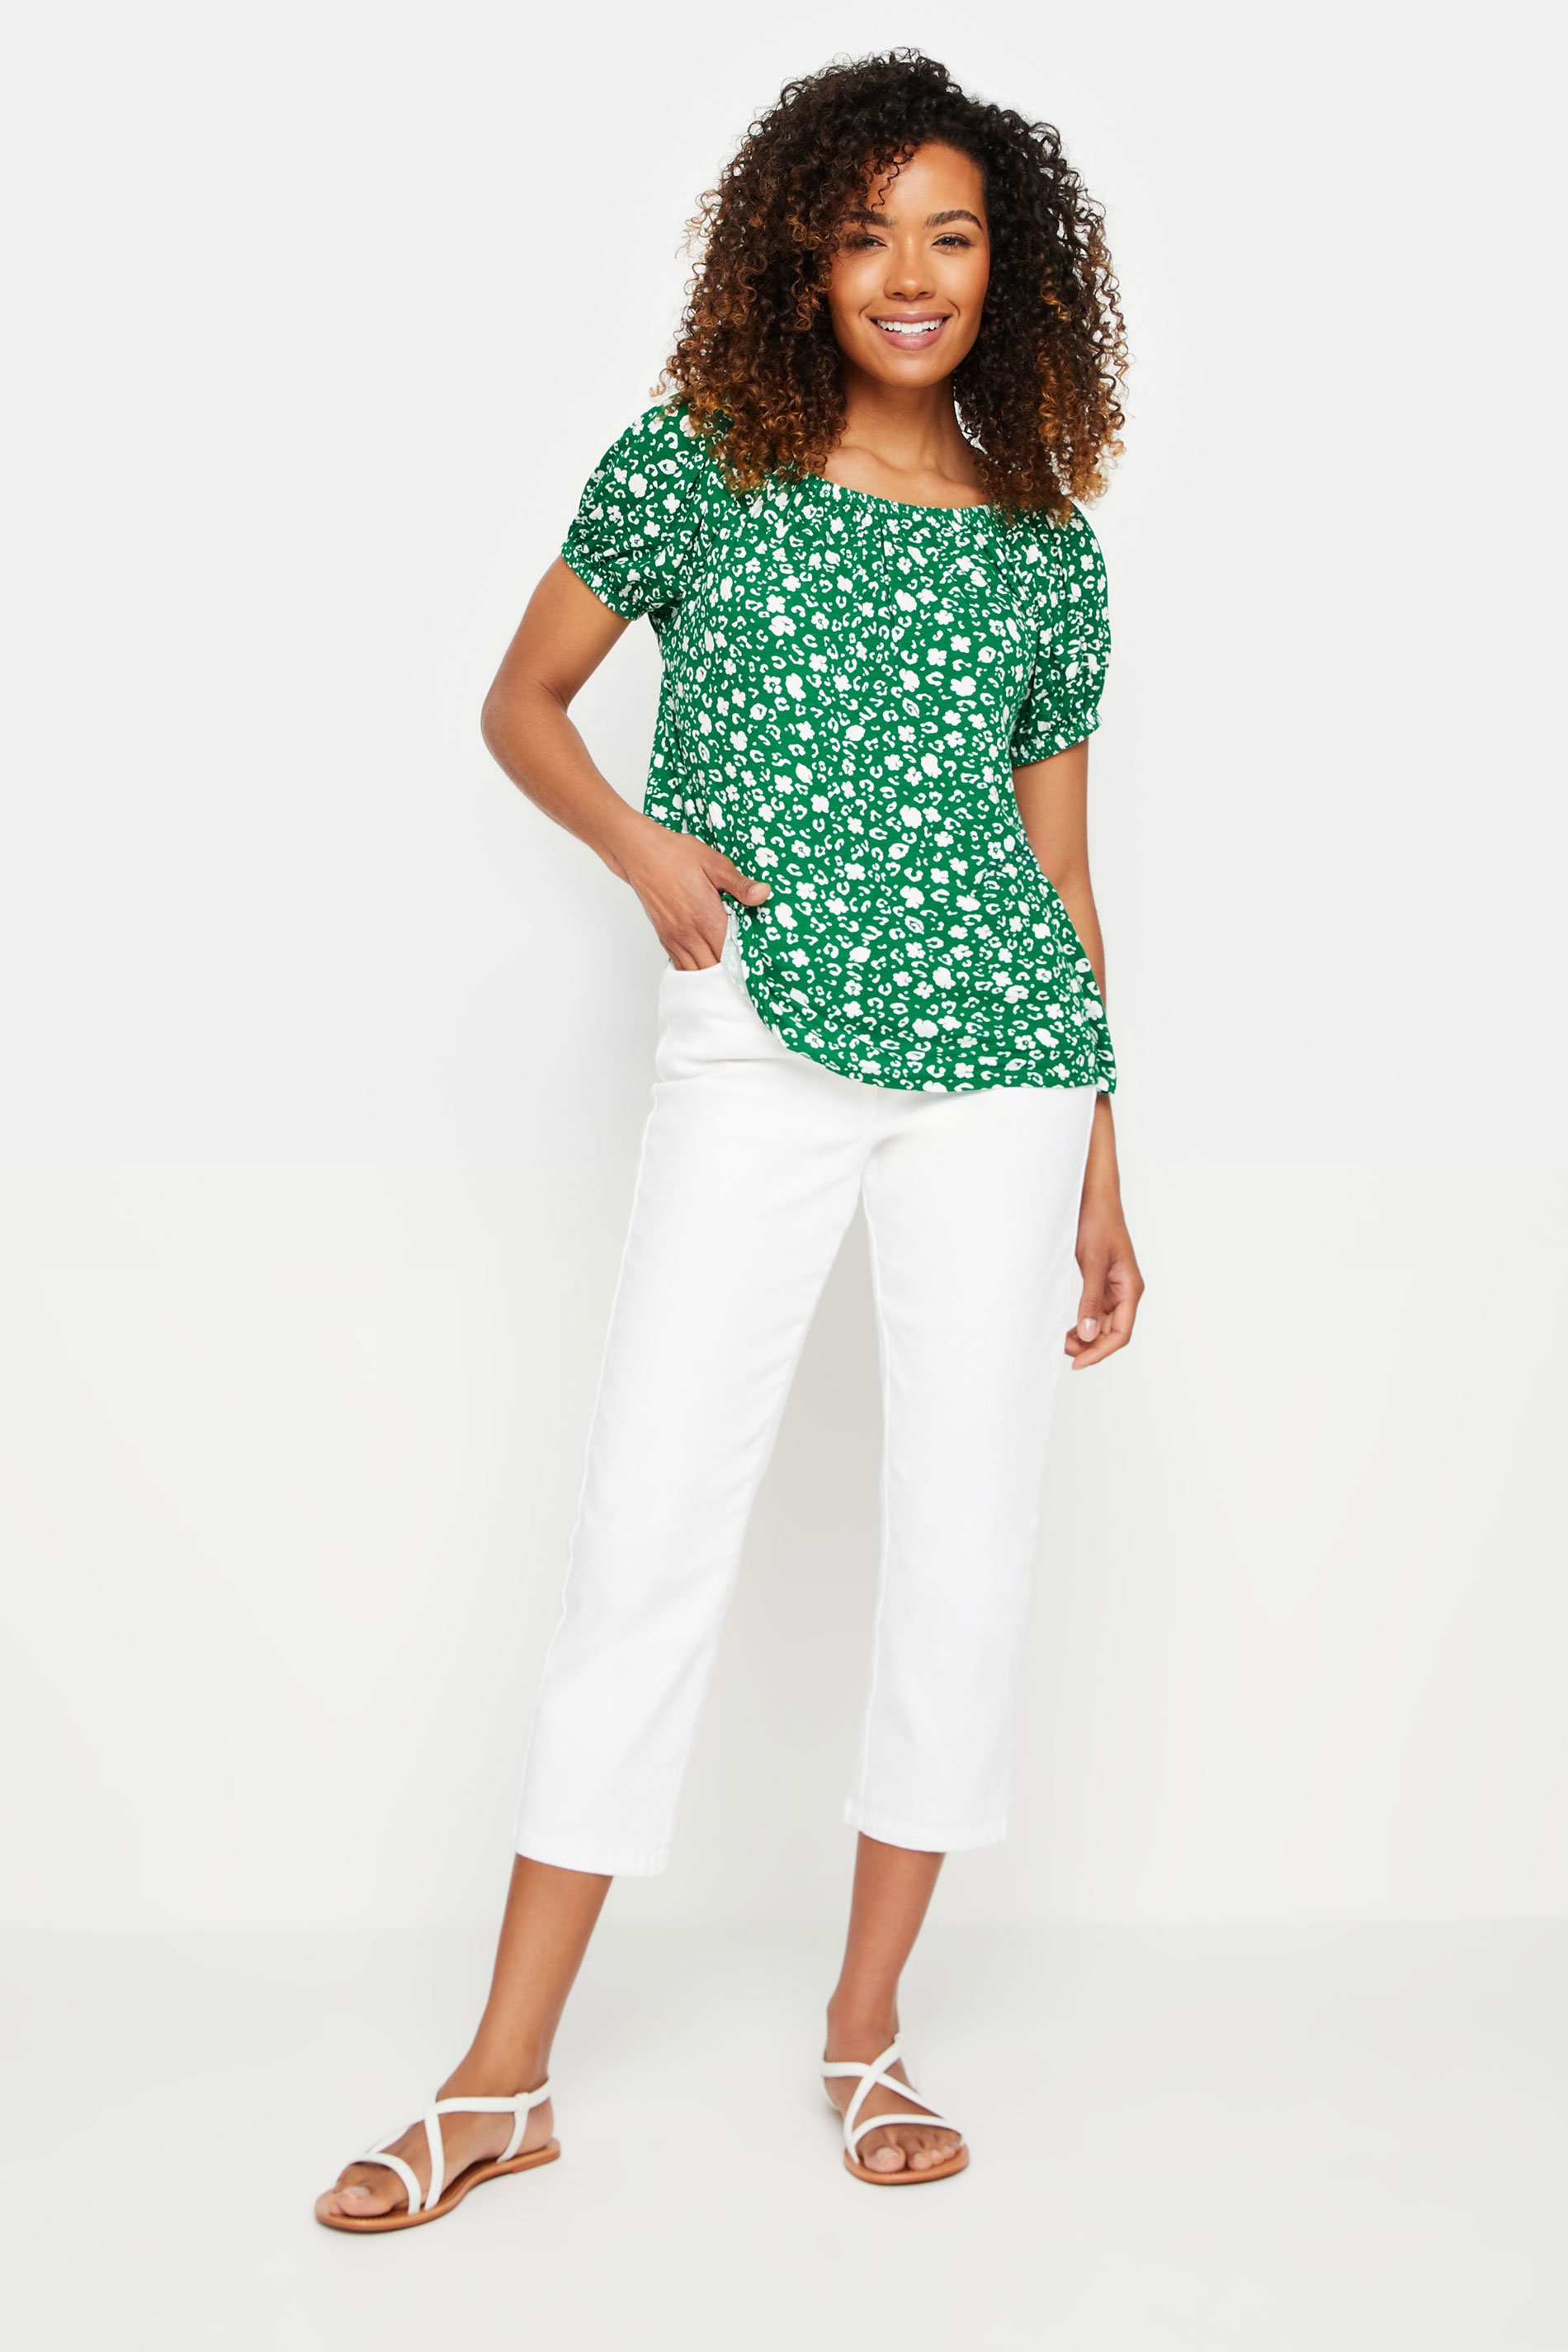 M&Co Women's Green Floral Print Short Sleeve Boho Top | M&Co 2